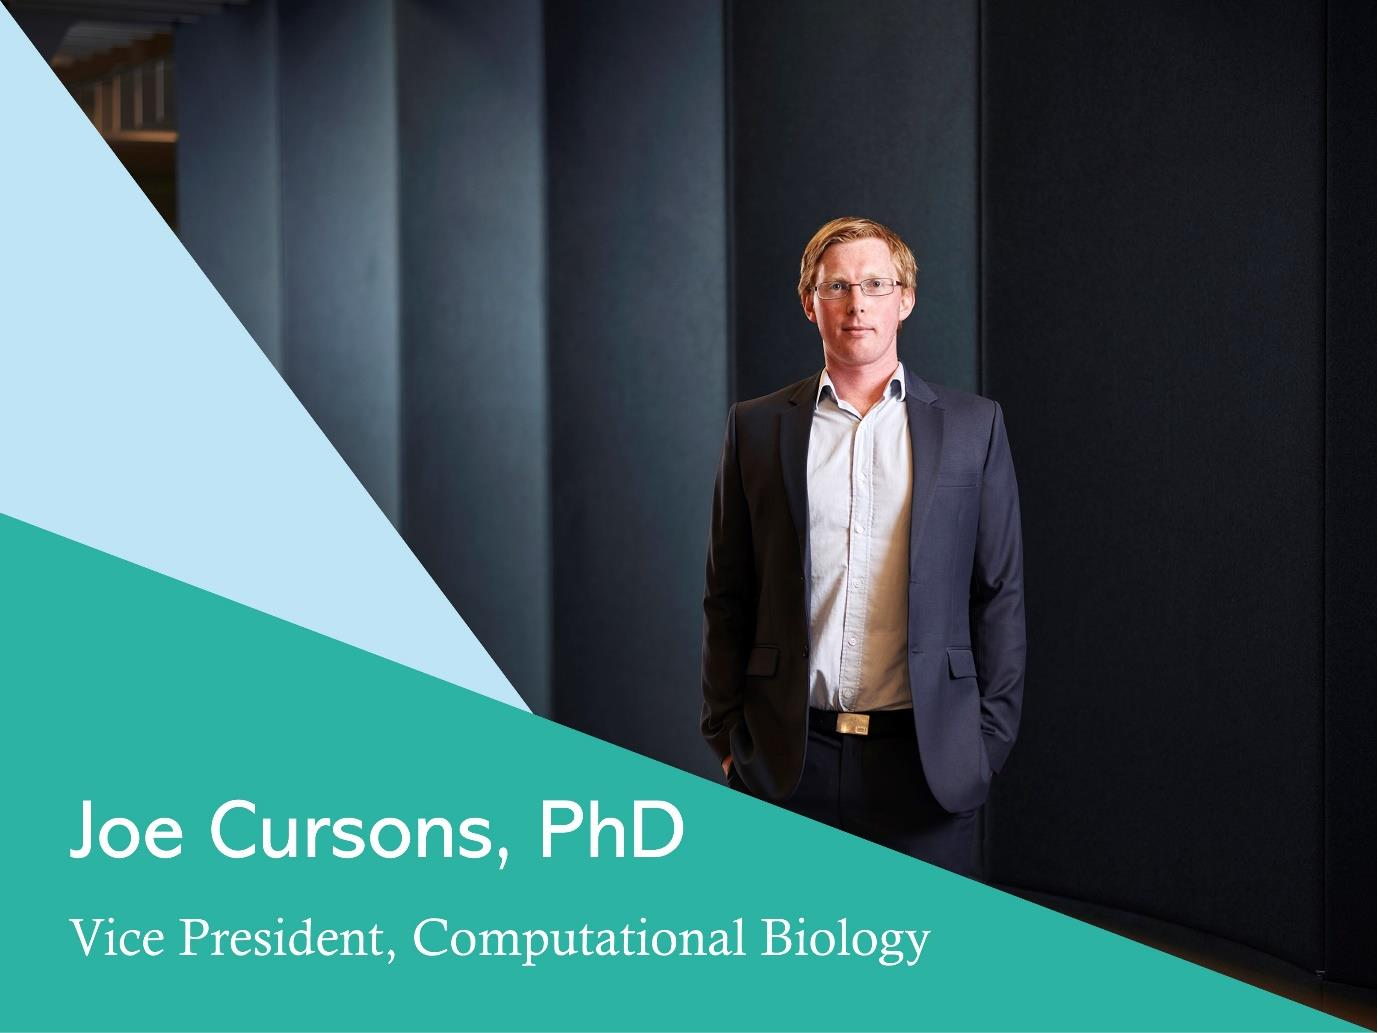 Joe Cursons promoted to Vice President, Computational Biology